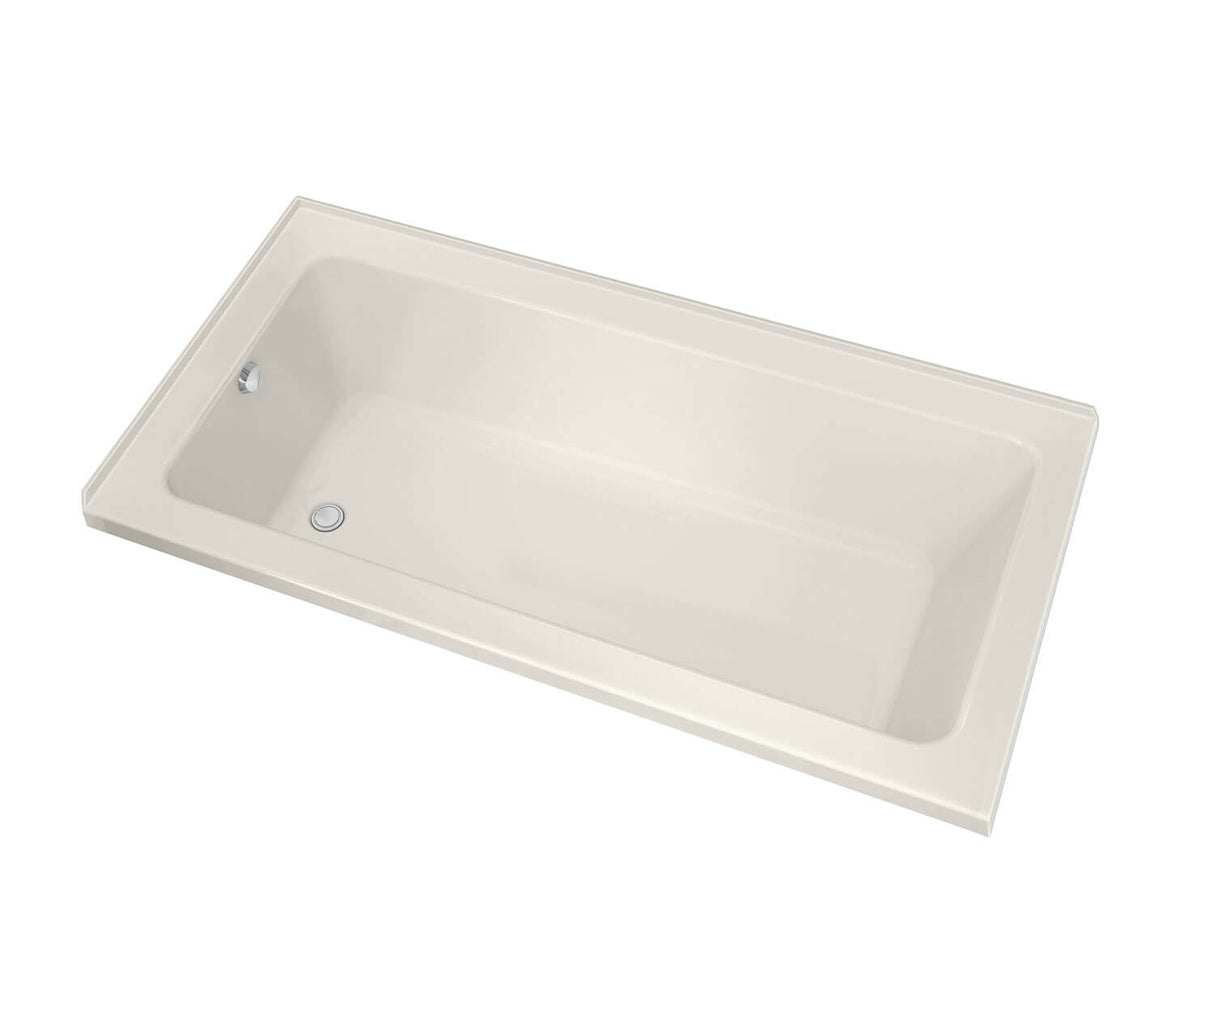 MAAX 106208-L-000-007 Pose 6636 IF Acrylic Corner Left Left-Hand Drain Bathtub in Biscuit